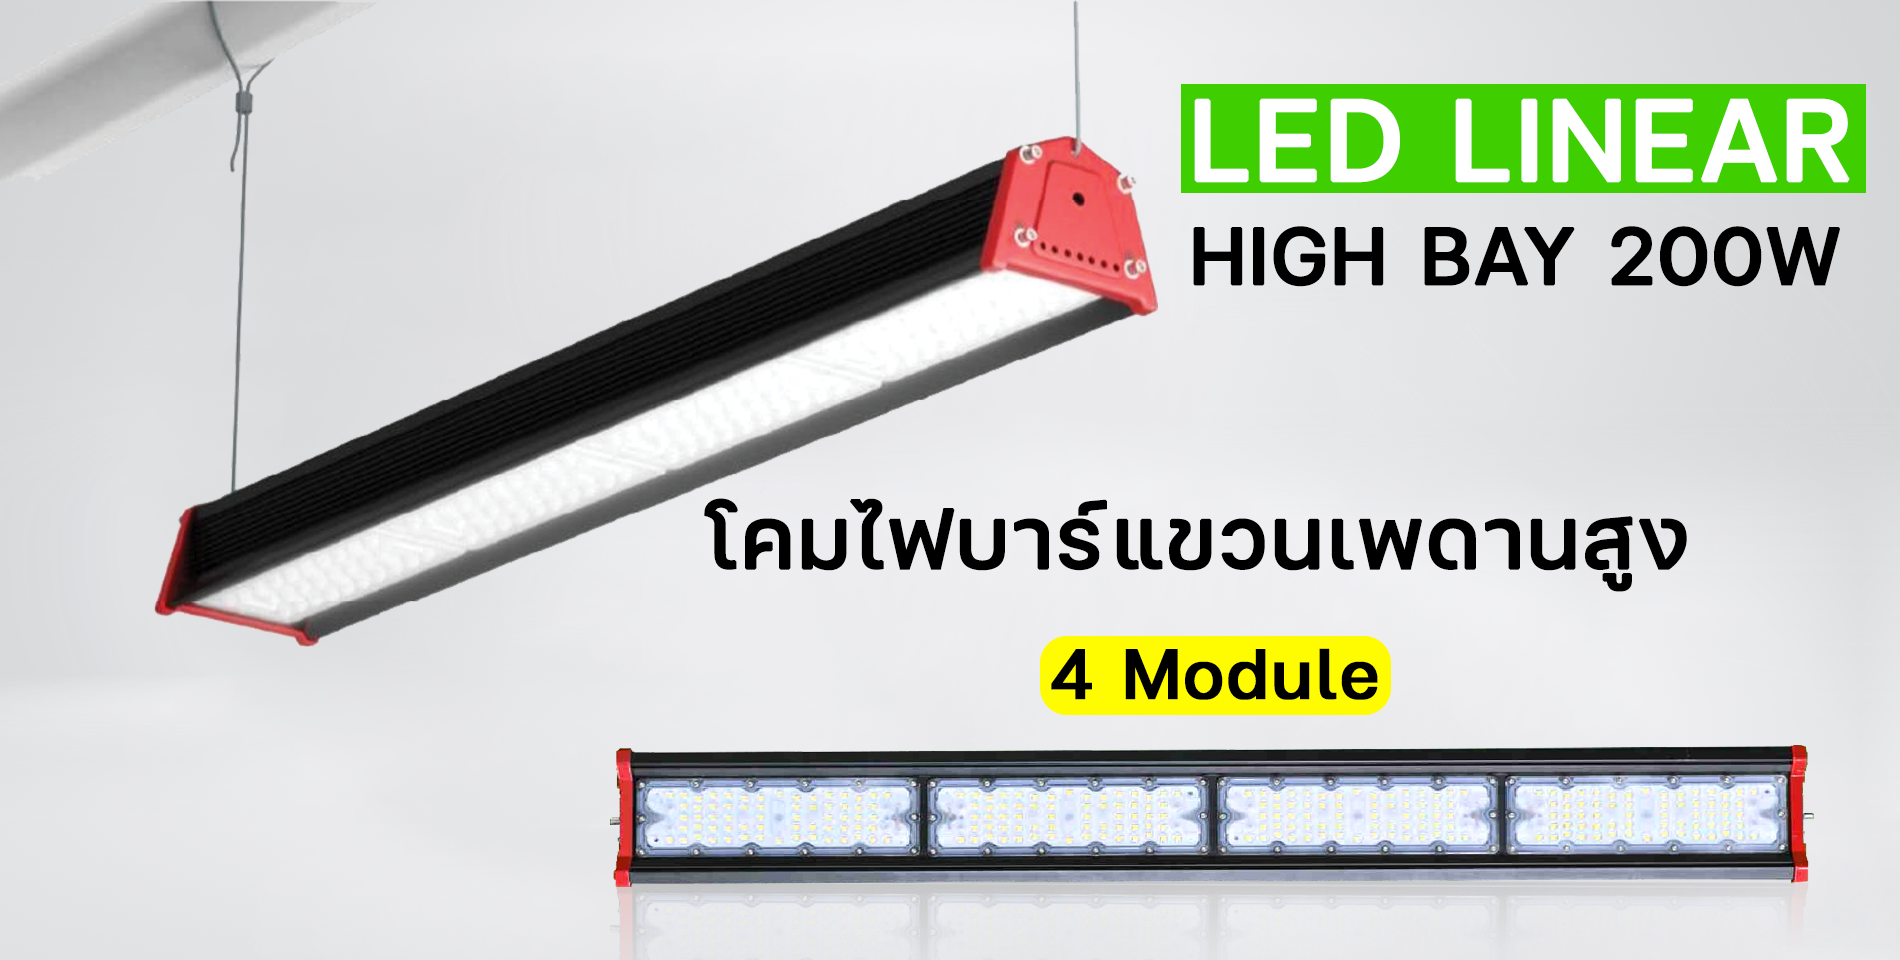 led linear high bay 200w